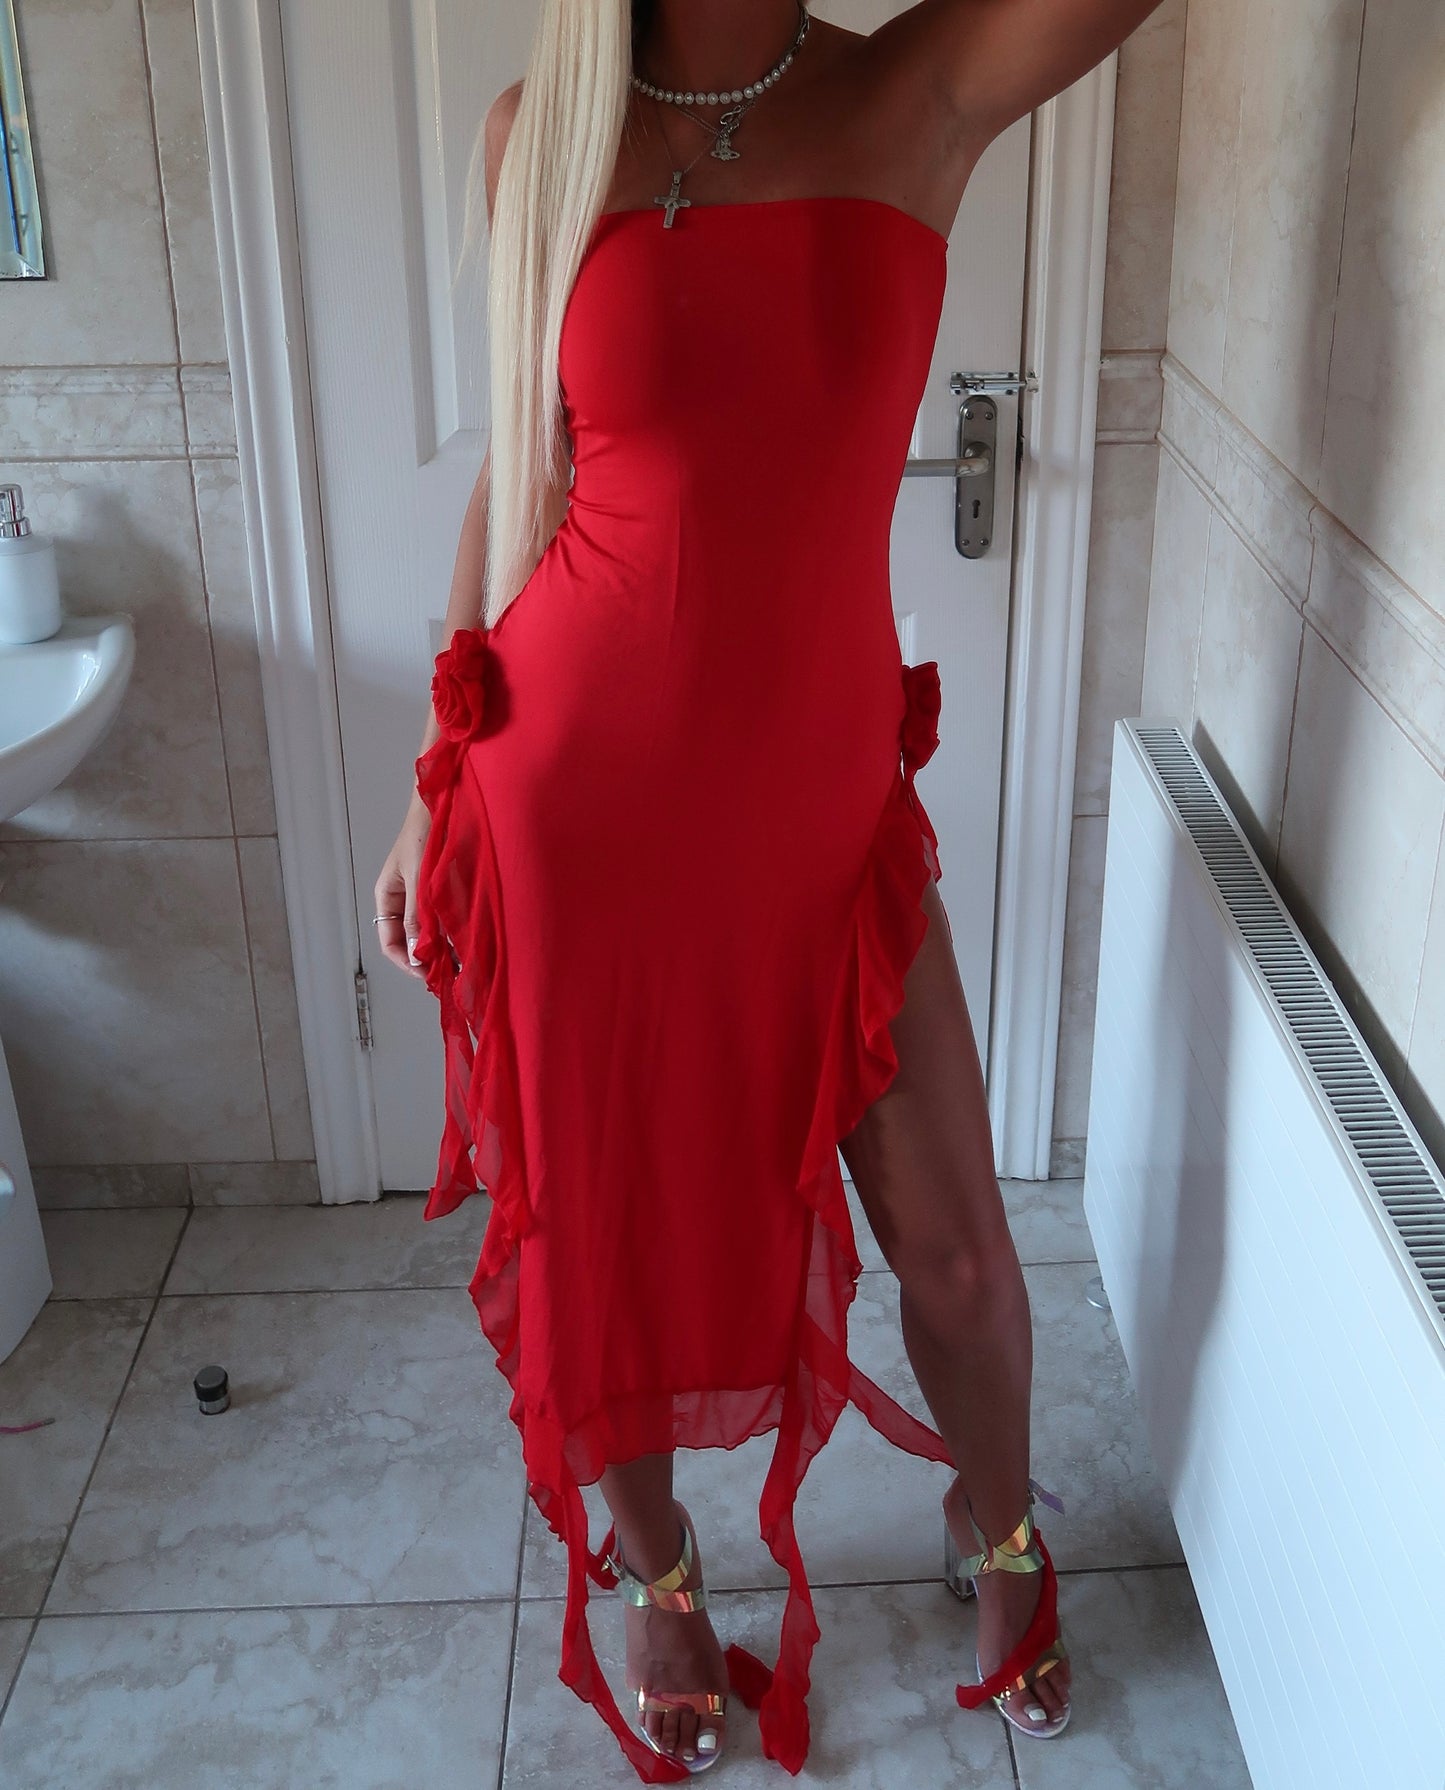 Red Dream dress